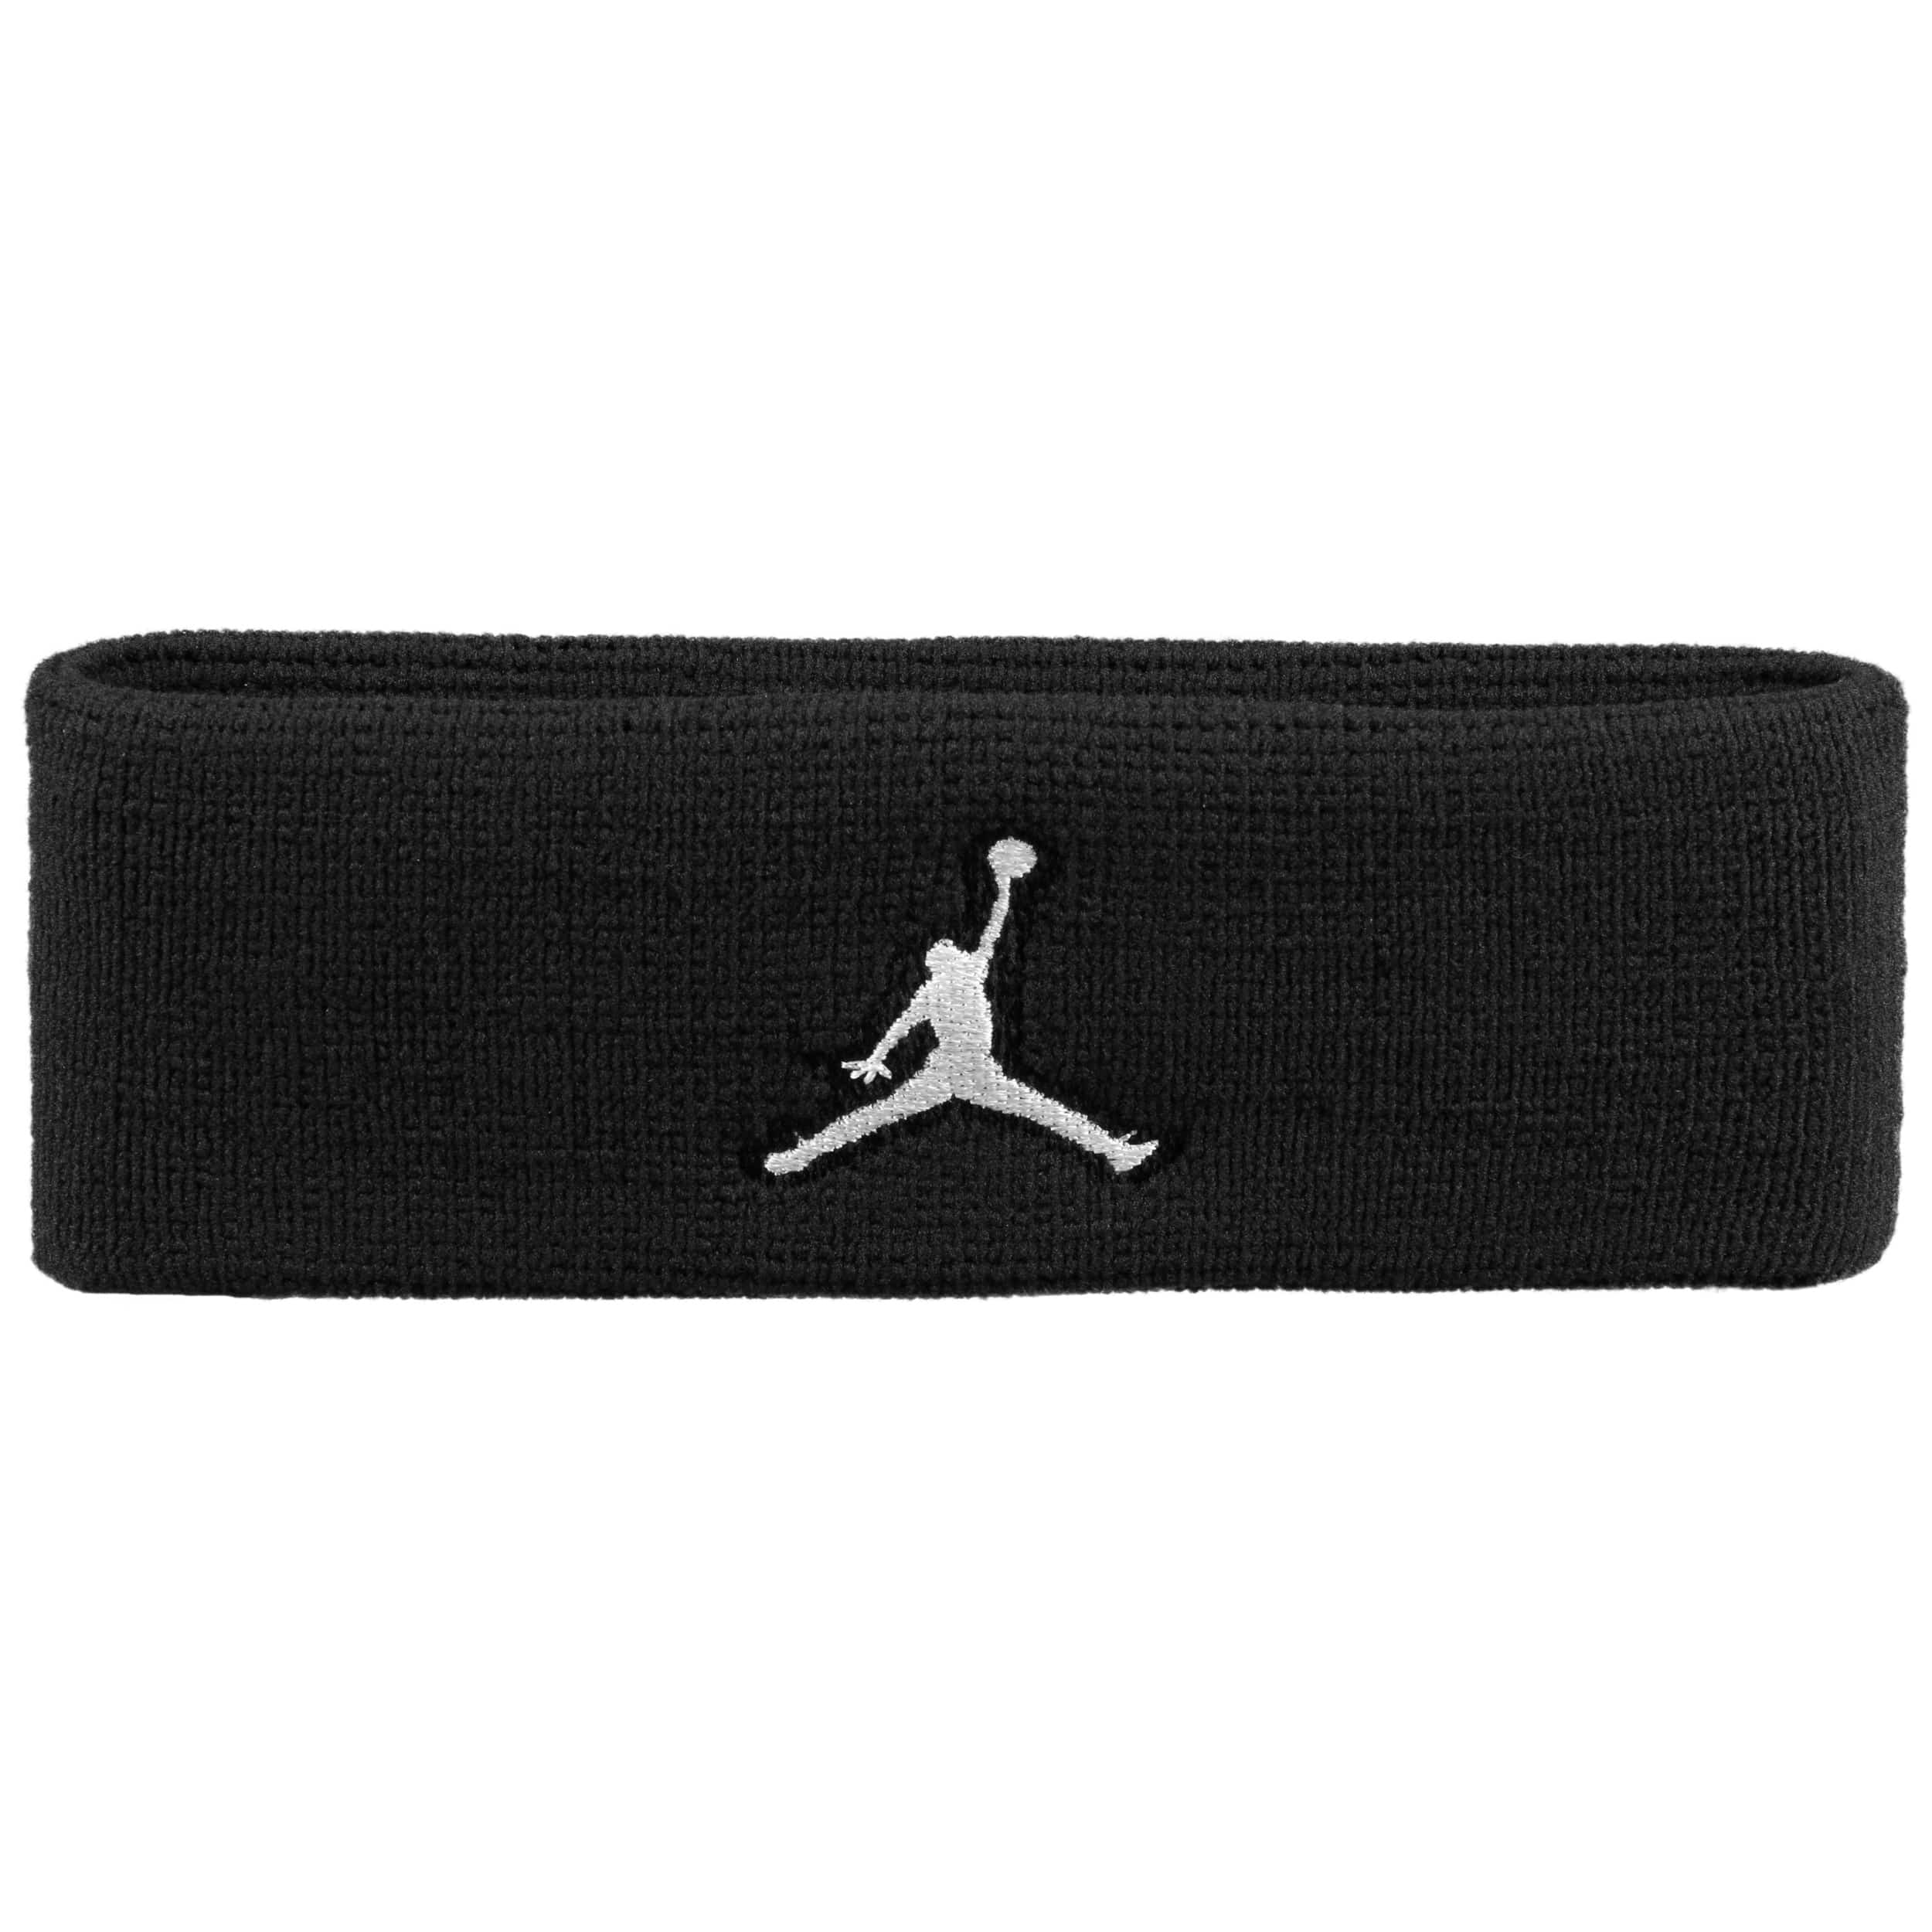 Bandeau Jordan Jumpman pour Homme. Nike LU